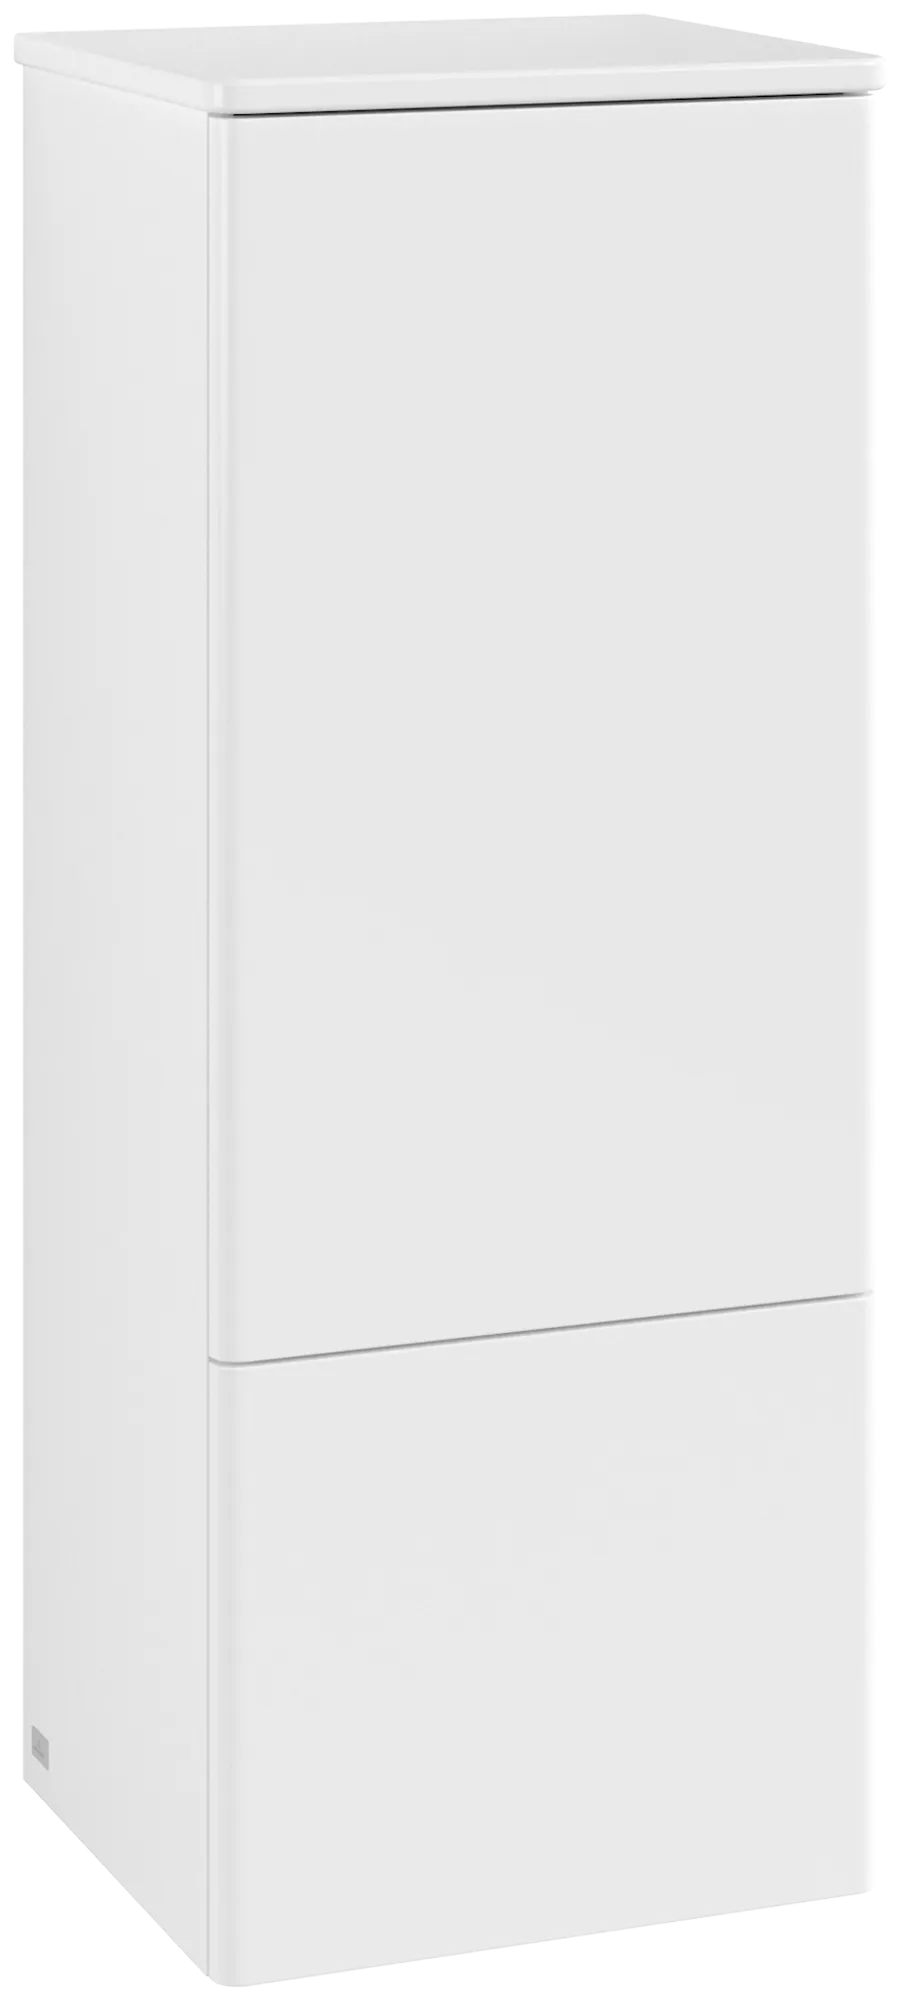 VILLEROY BOCH Antao Medium-height cabinet, 1 door, 414 x 1039 x 356 mm, Front without structure, White Matt Lacquer / White Matt Lacquer #L43000MT resmi